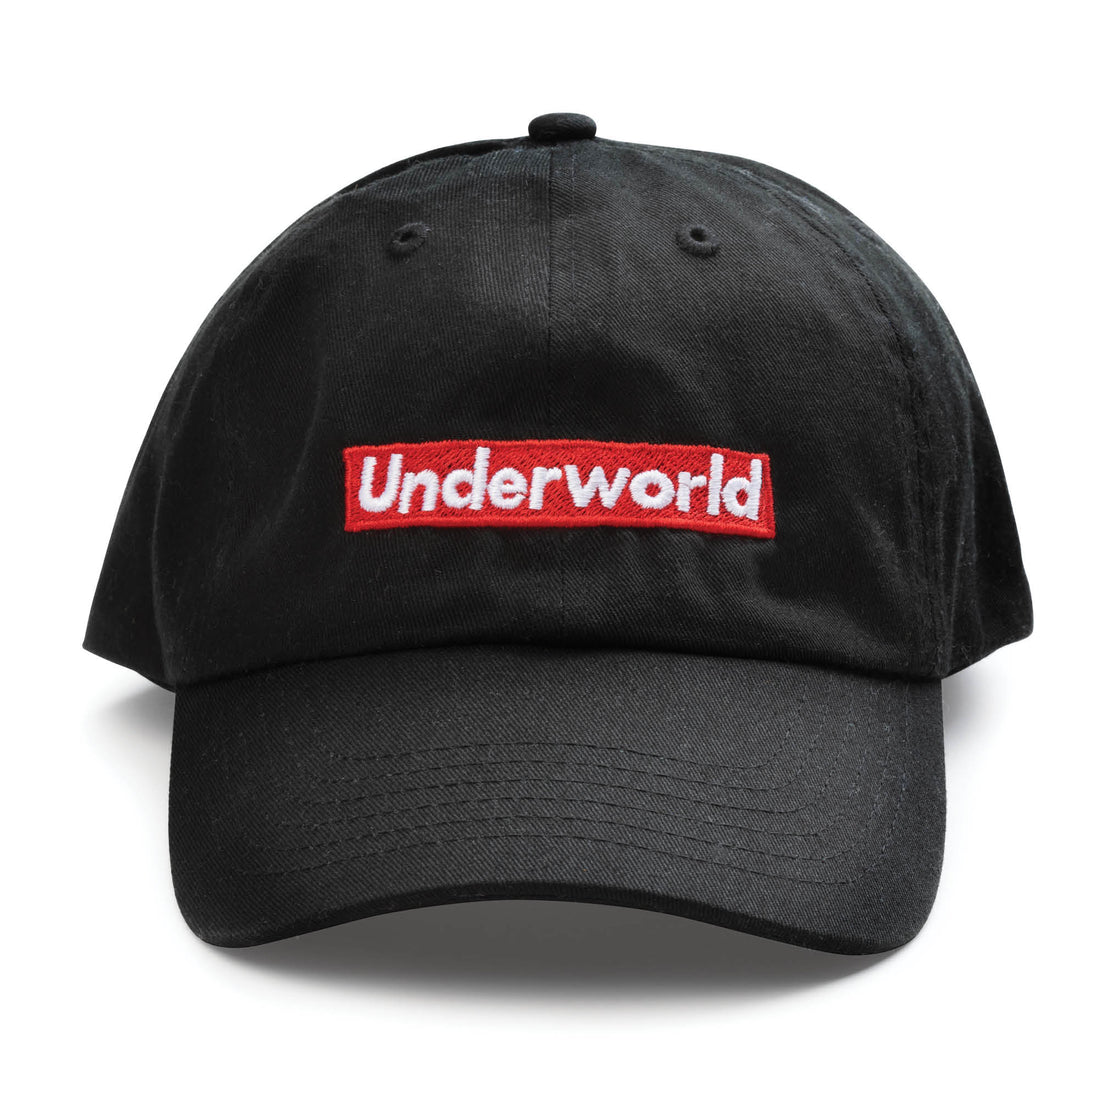 The Underworld Black Dad Cap